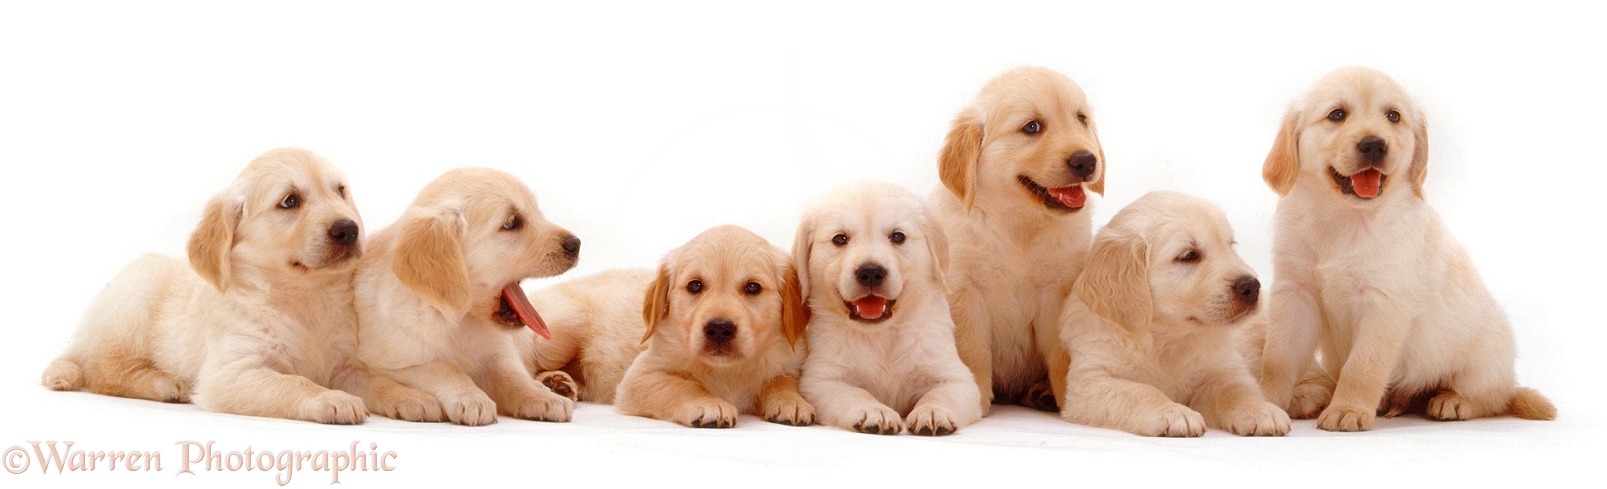 Retriever puppies, white background